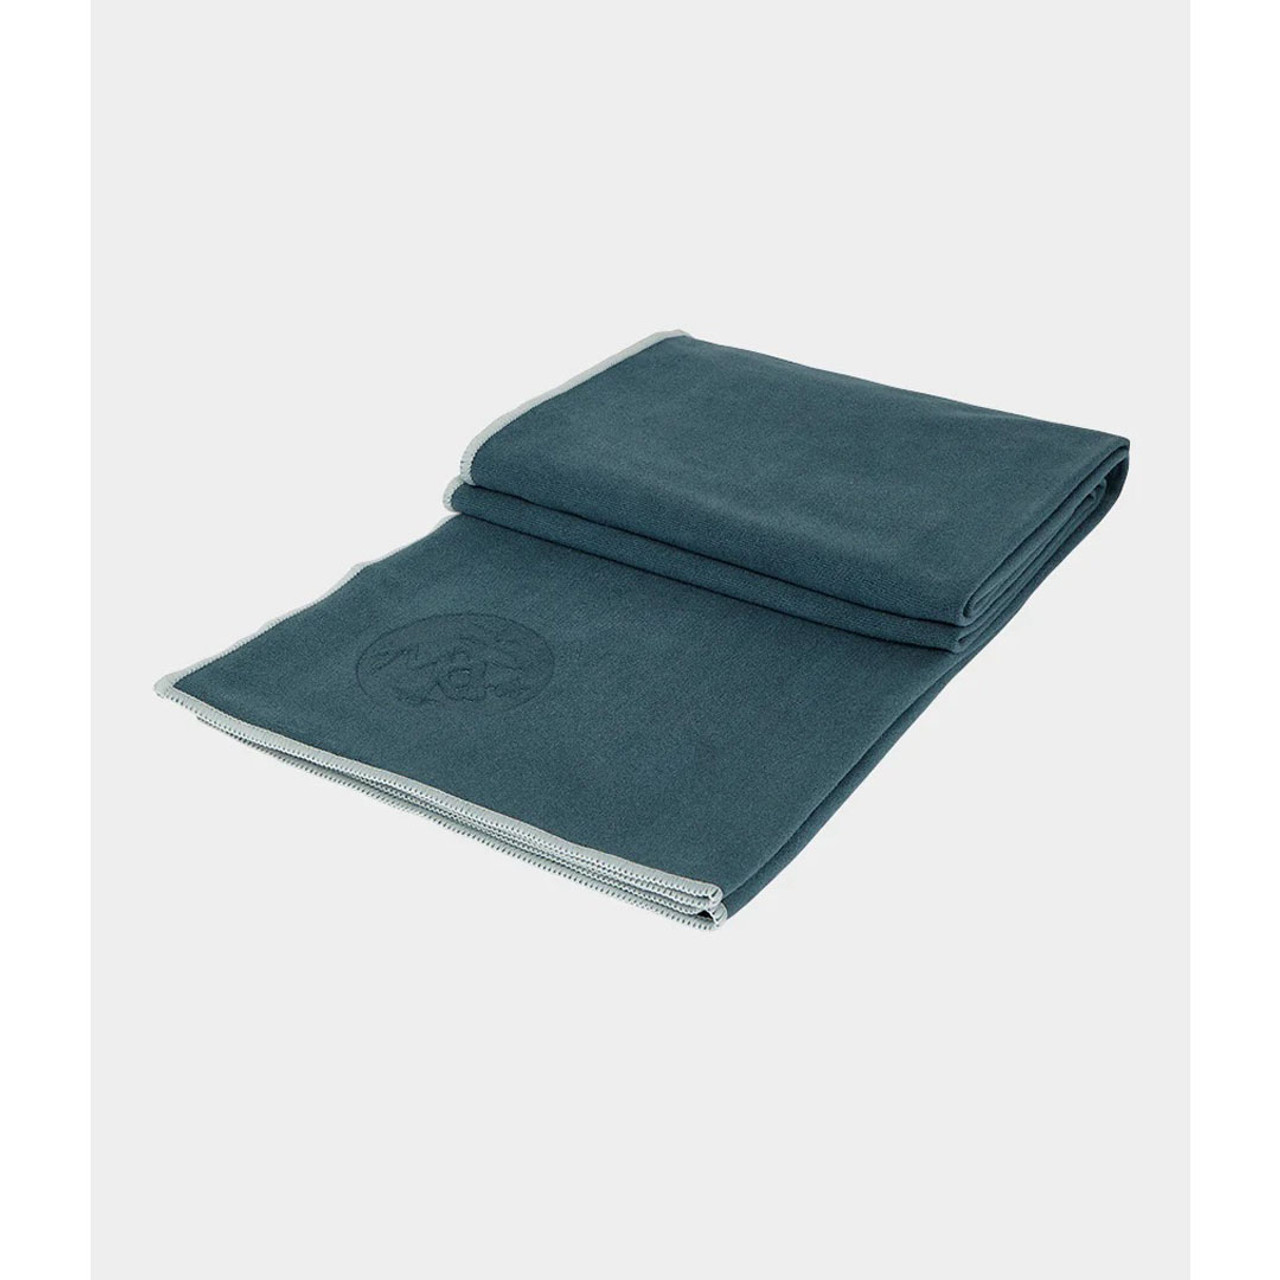 eQua Yoga Mat Towel - Quick Drying Microfiber, Lightweight, Easy for  Travel, Use in Hot Yoga, Vinyasa